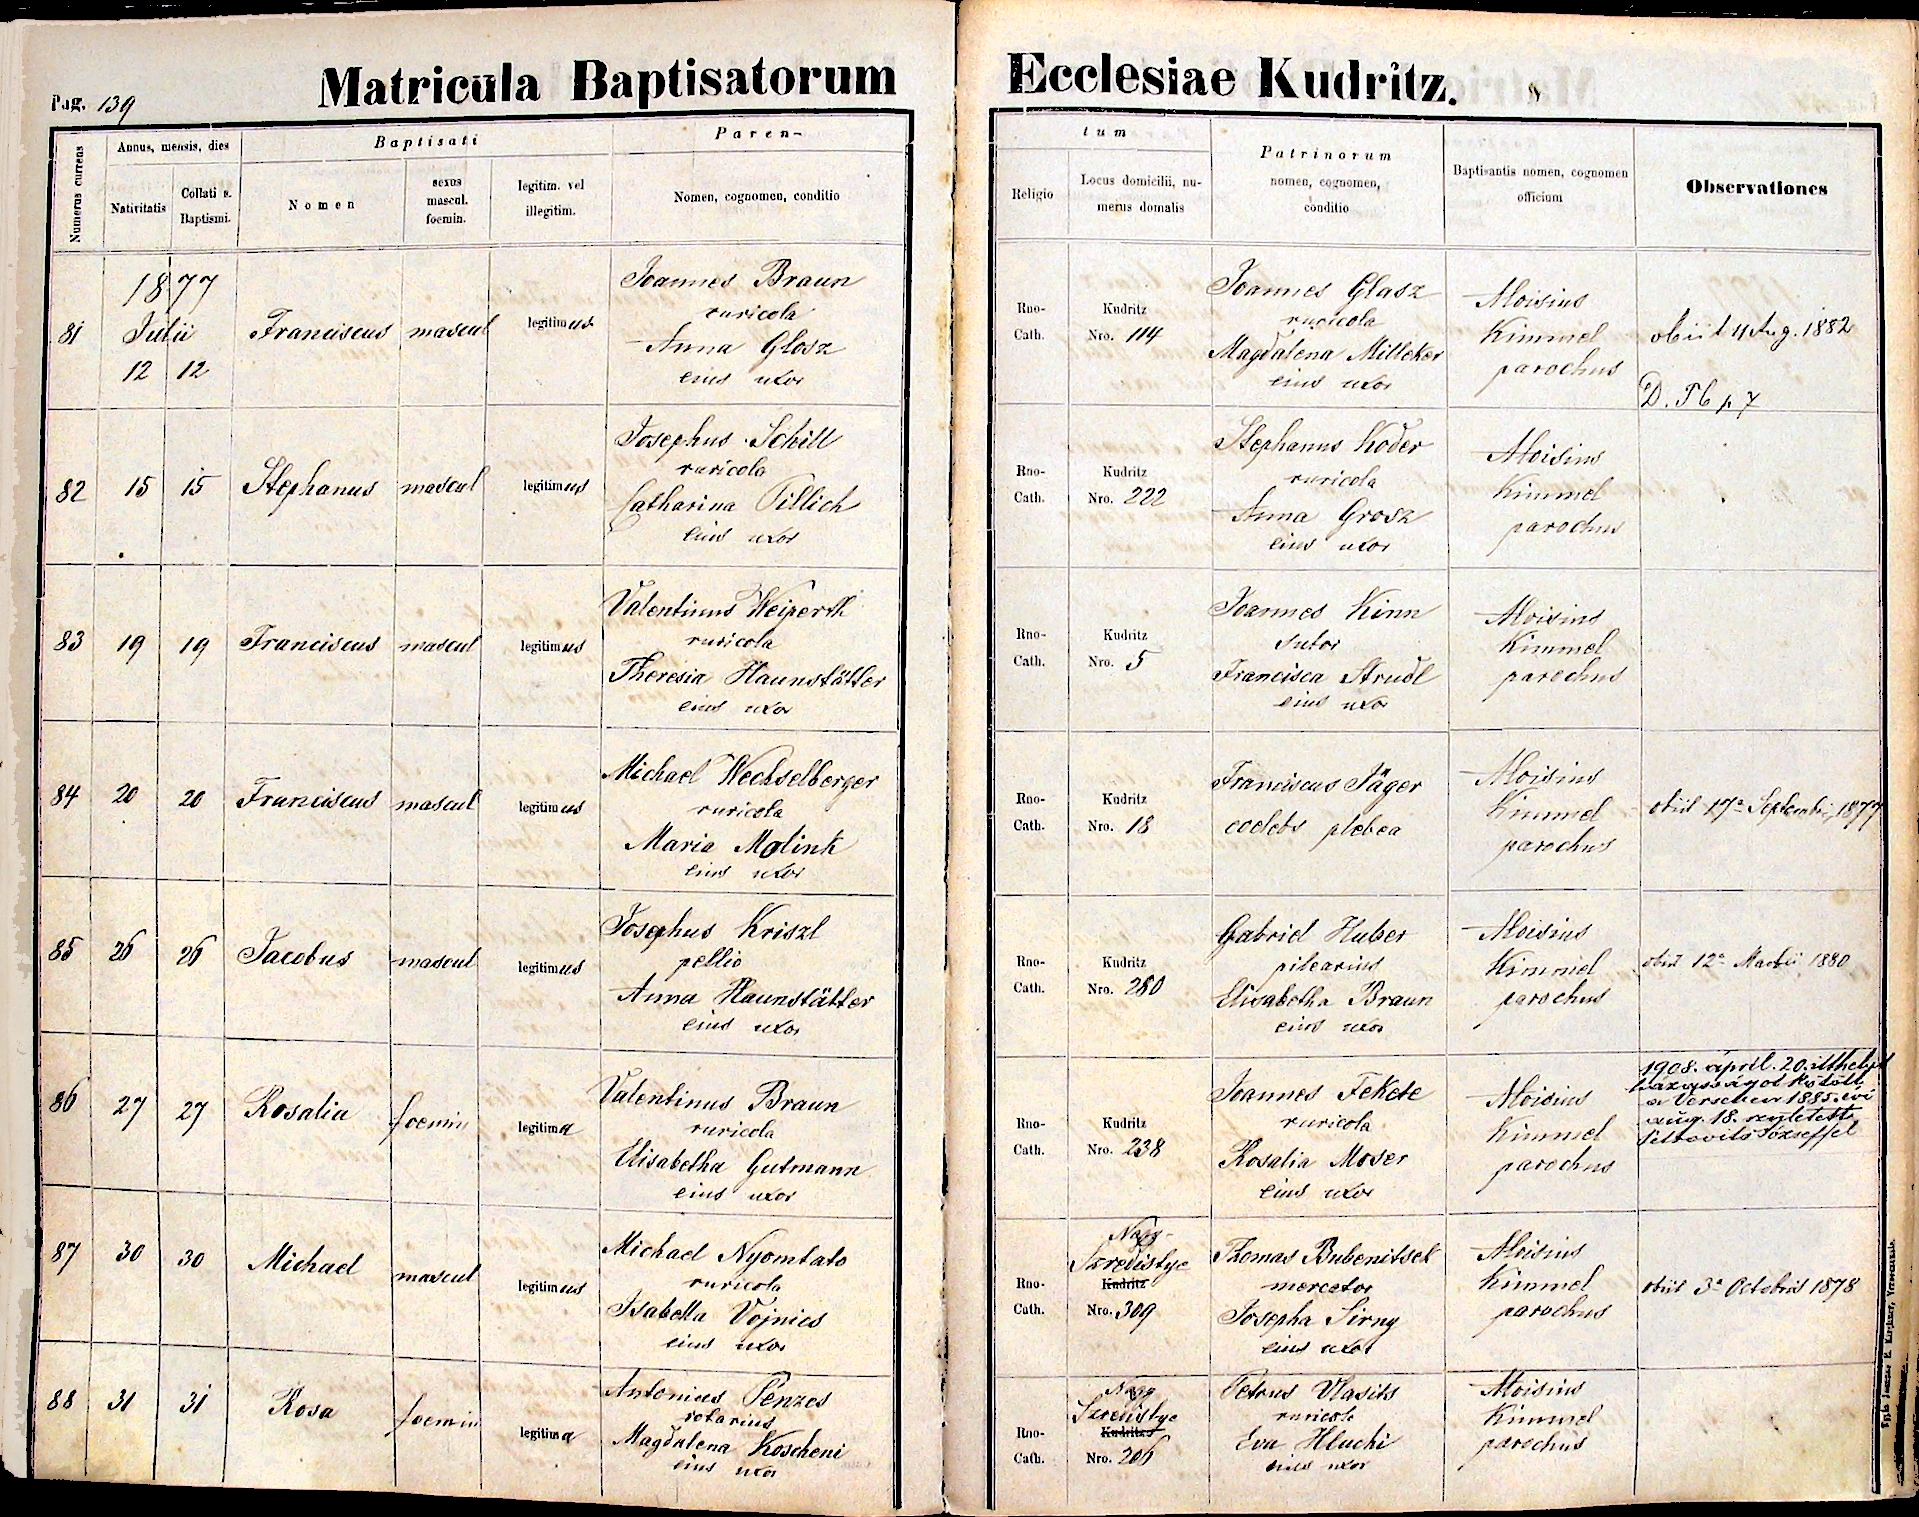 images/church_records/BIRTHS/1884-1899B/1893/139